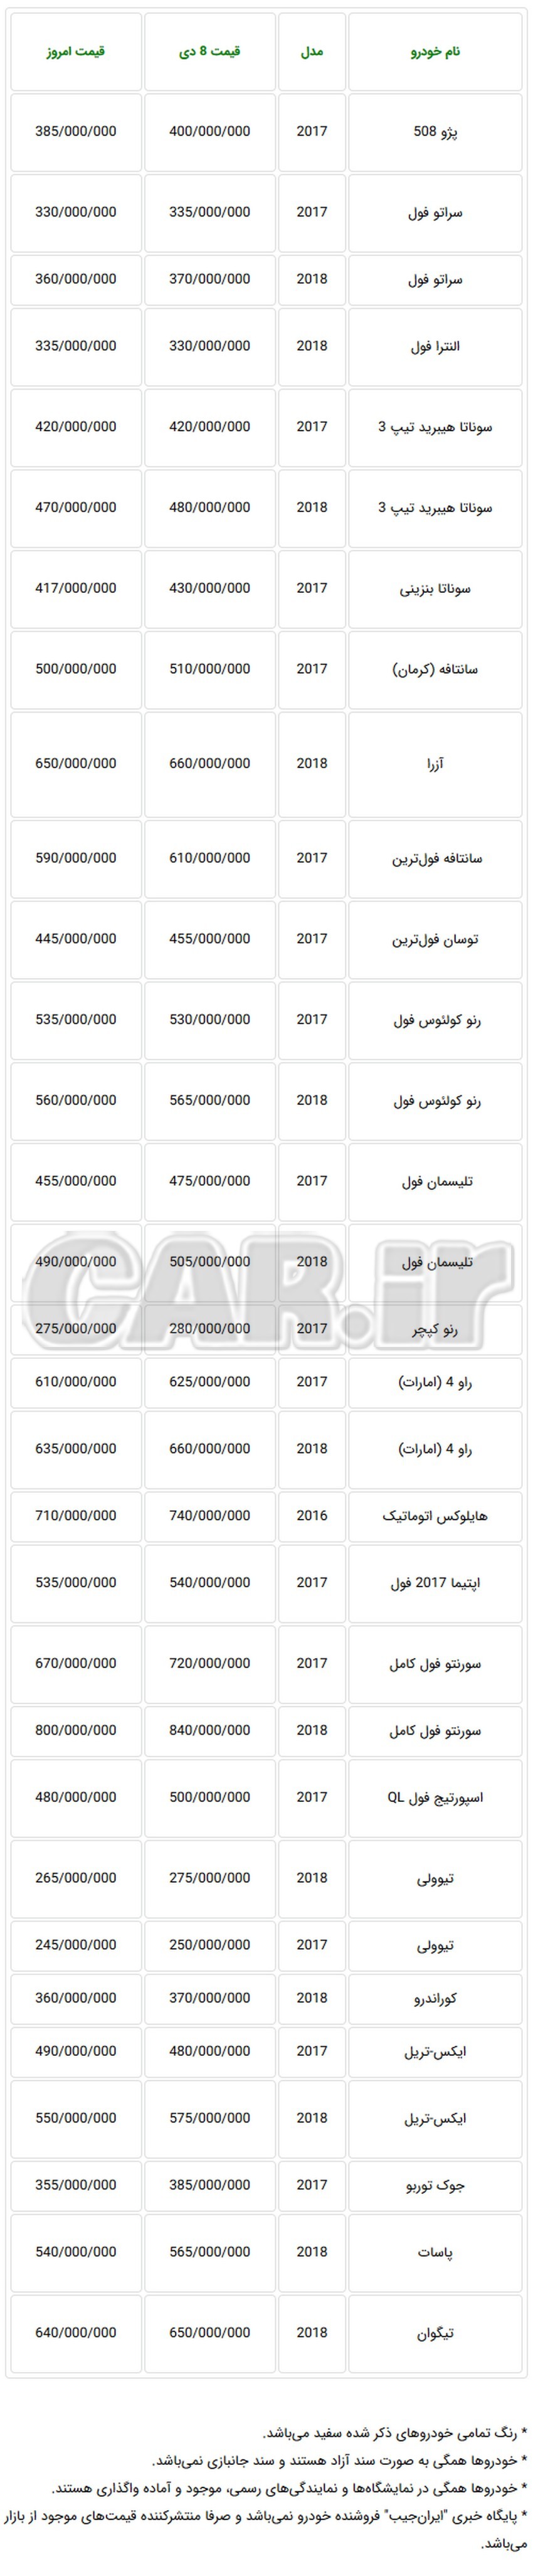 Screenshot_2019-01-19 قیمت خودروهای وارداتی در بازار تهران چهارشنبه 26 دی 97.jpg